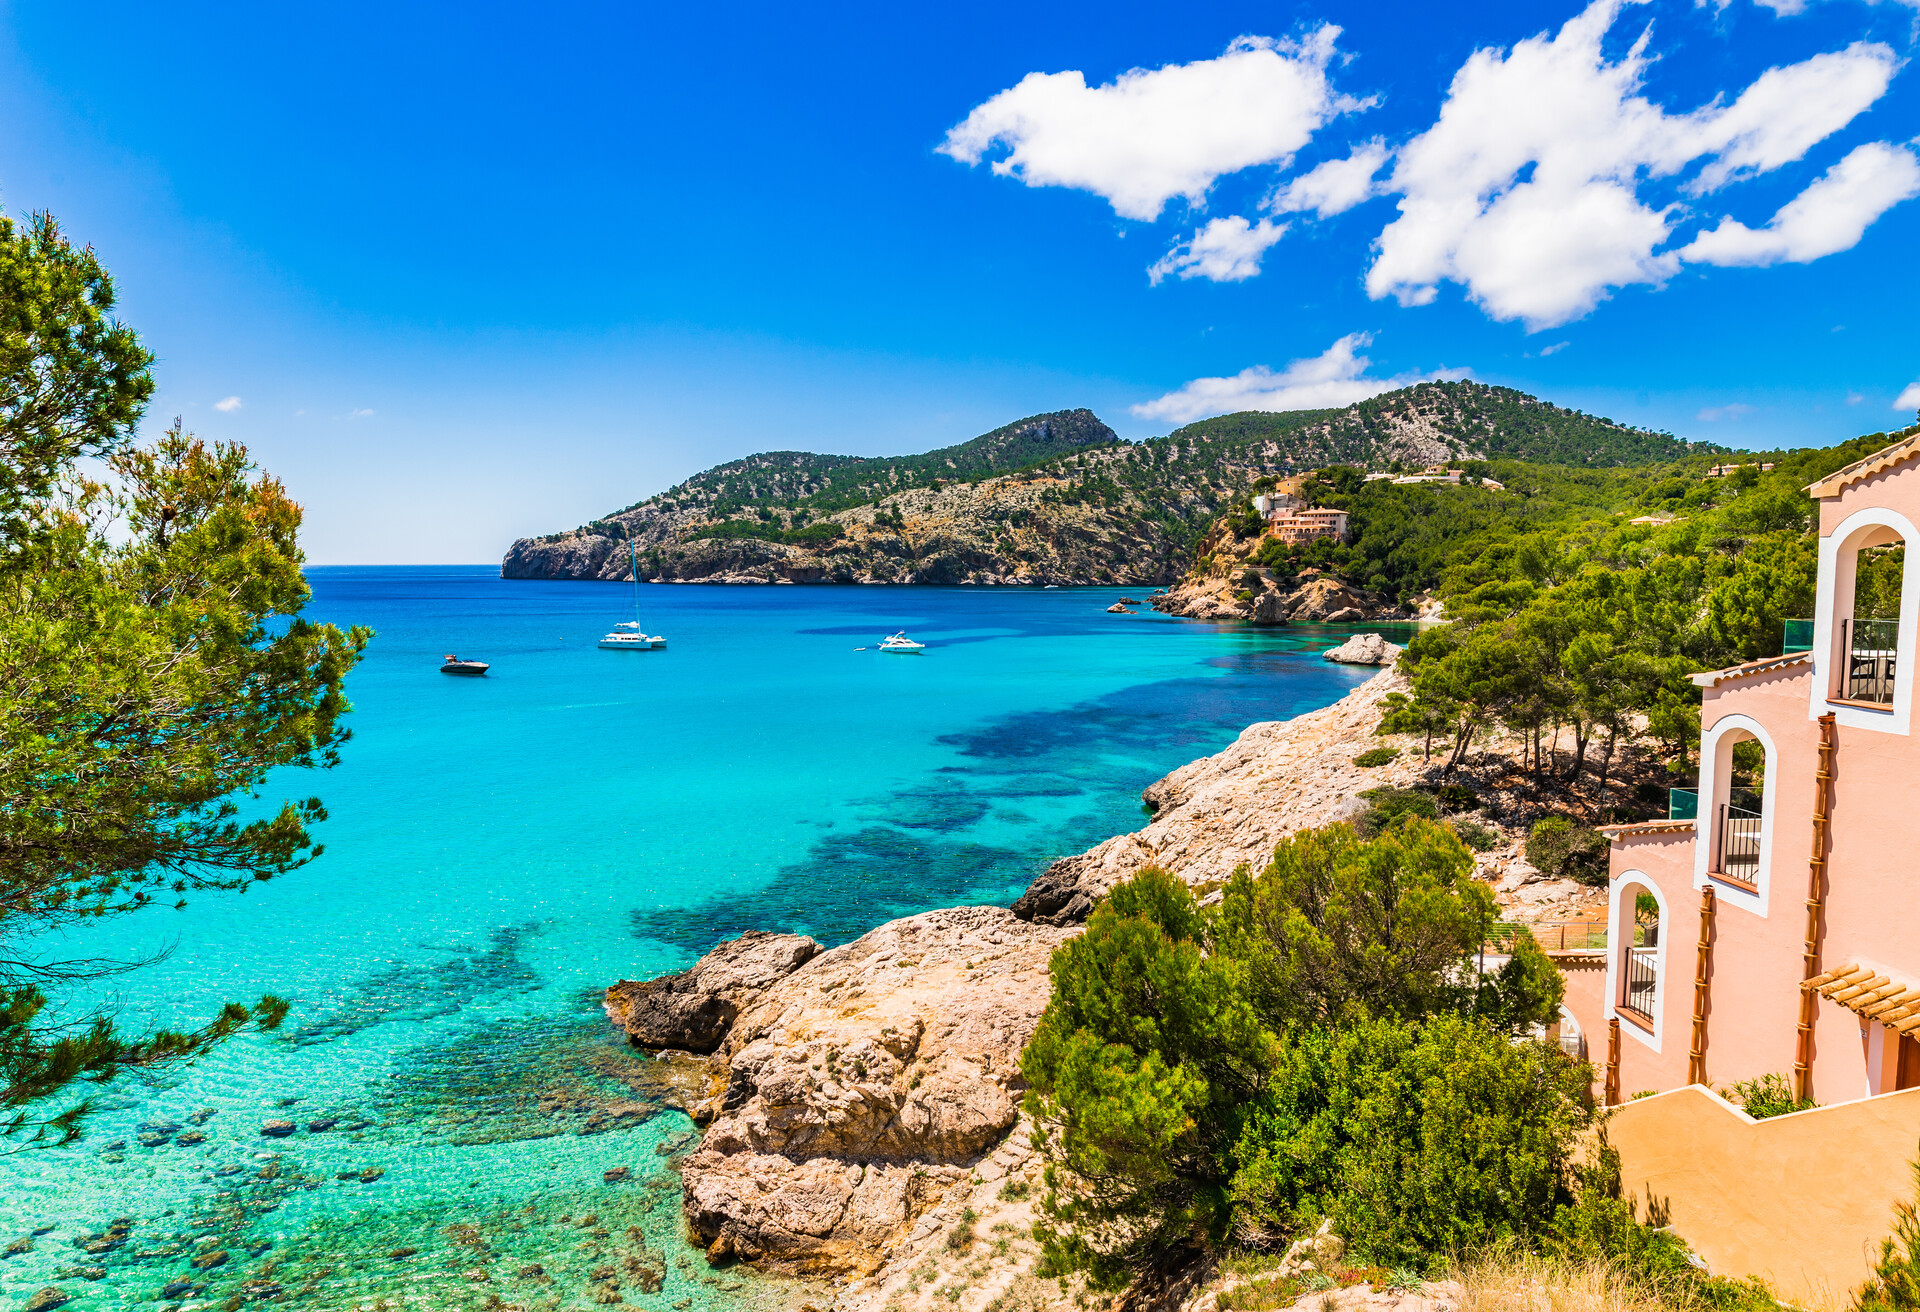 Idyllic sea view on Majorca island, beautiful coast of Camp de Mar bay, Spain Mediterranean Sea